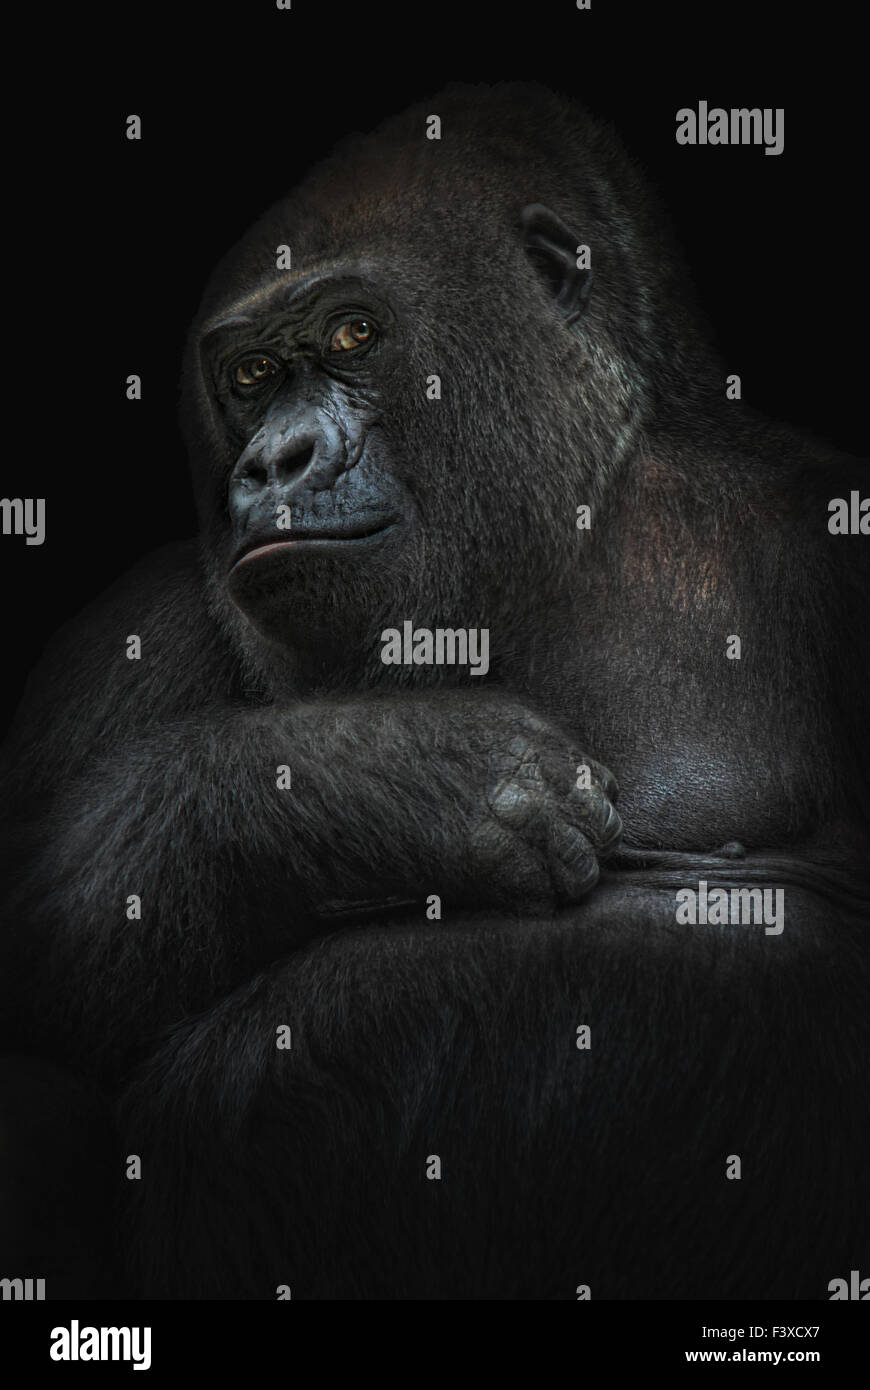 shy gorilla girl Stock Photo